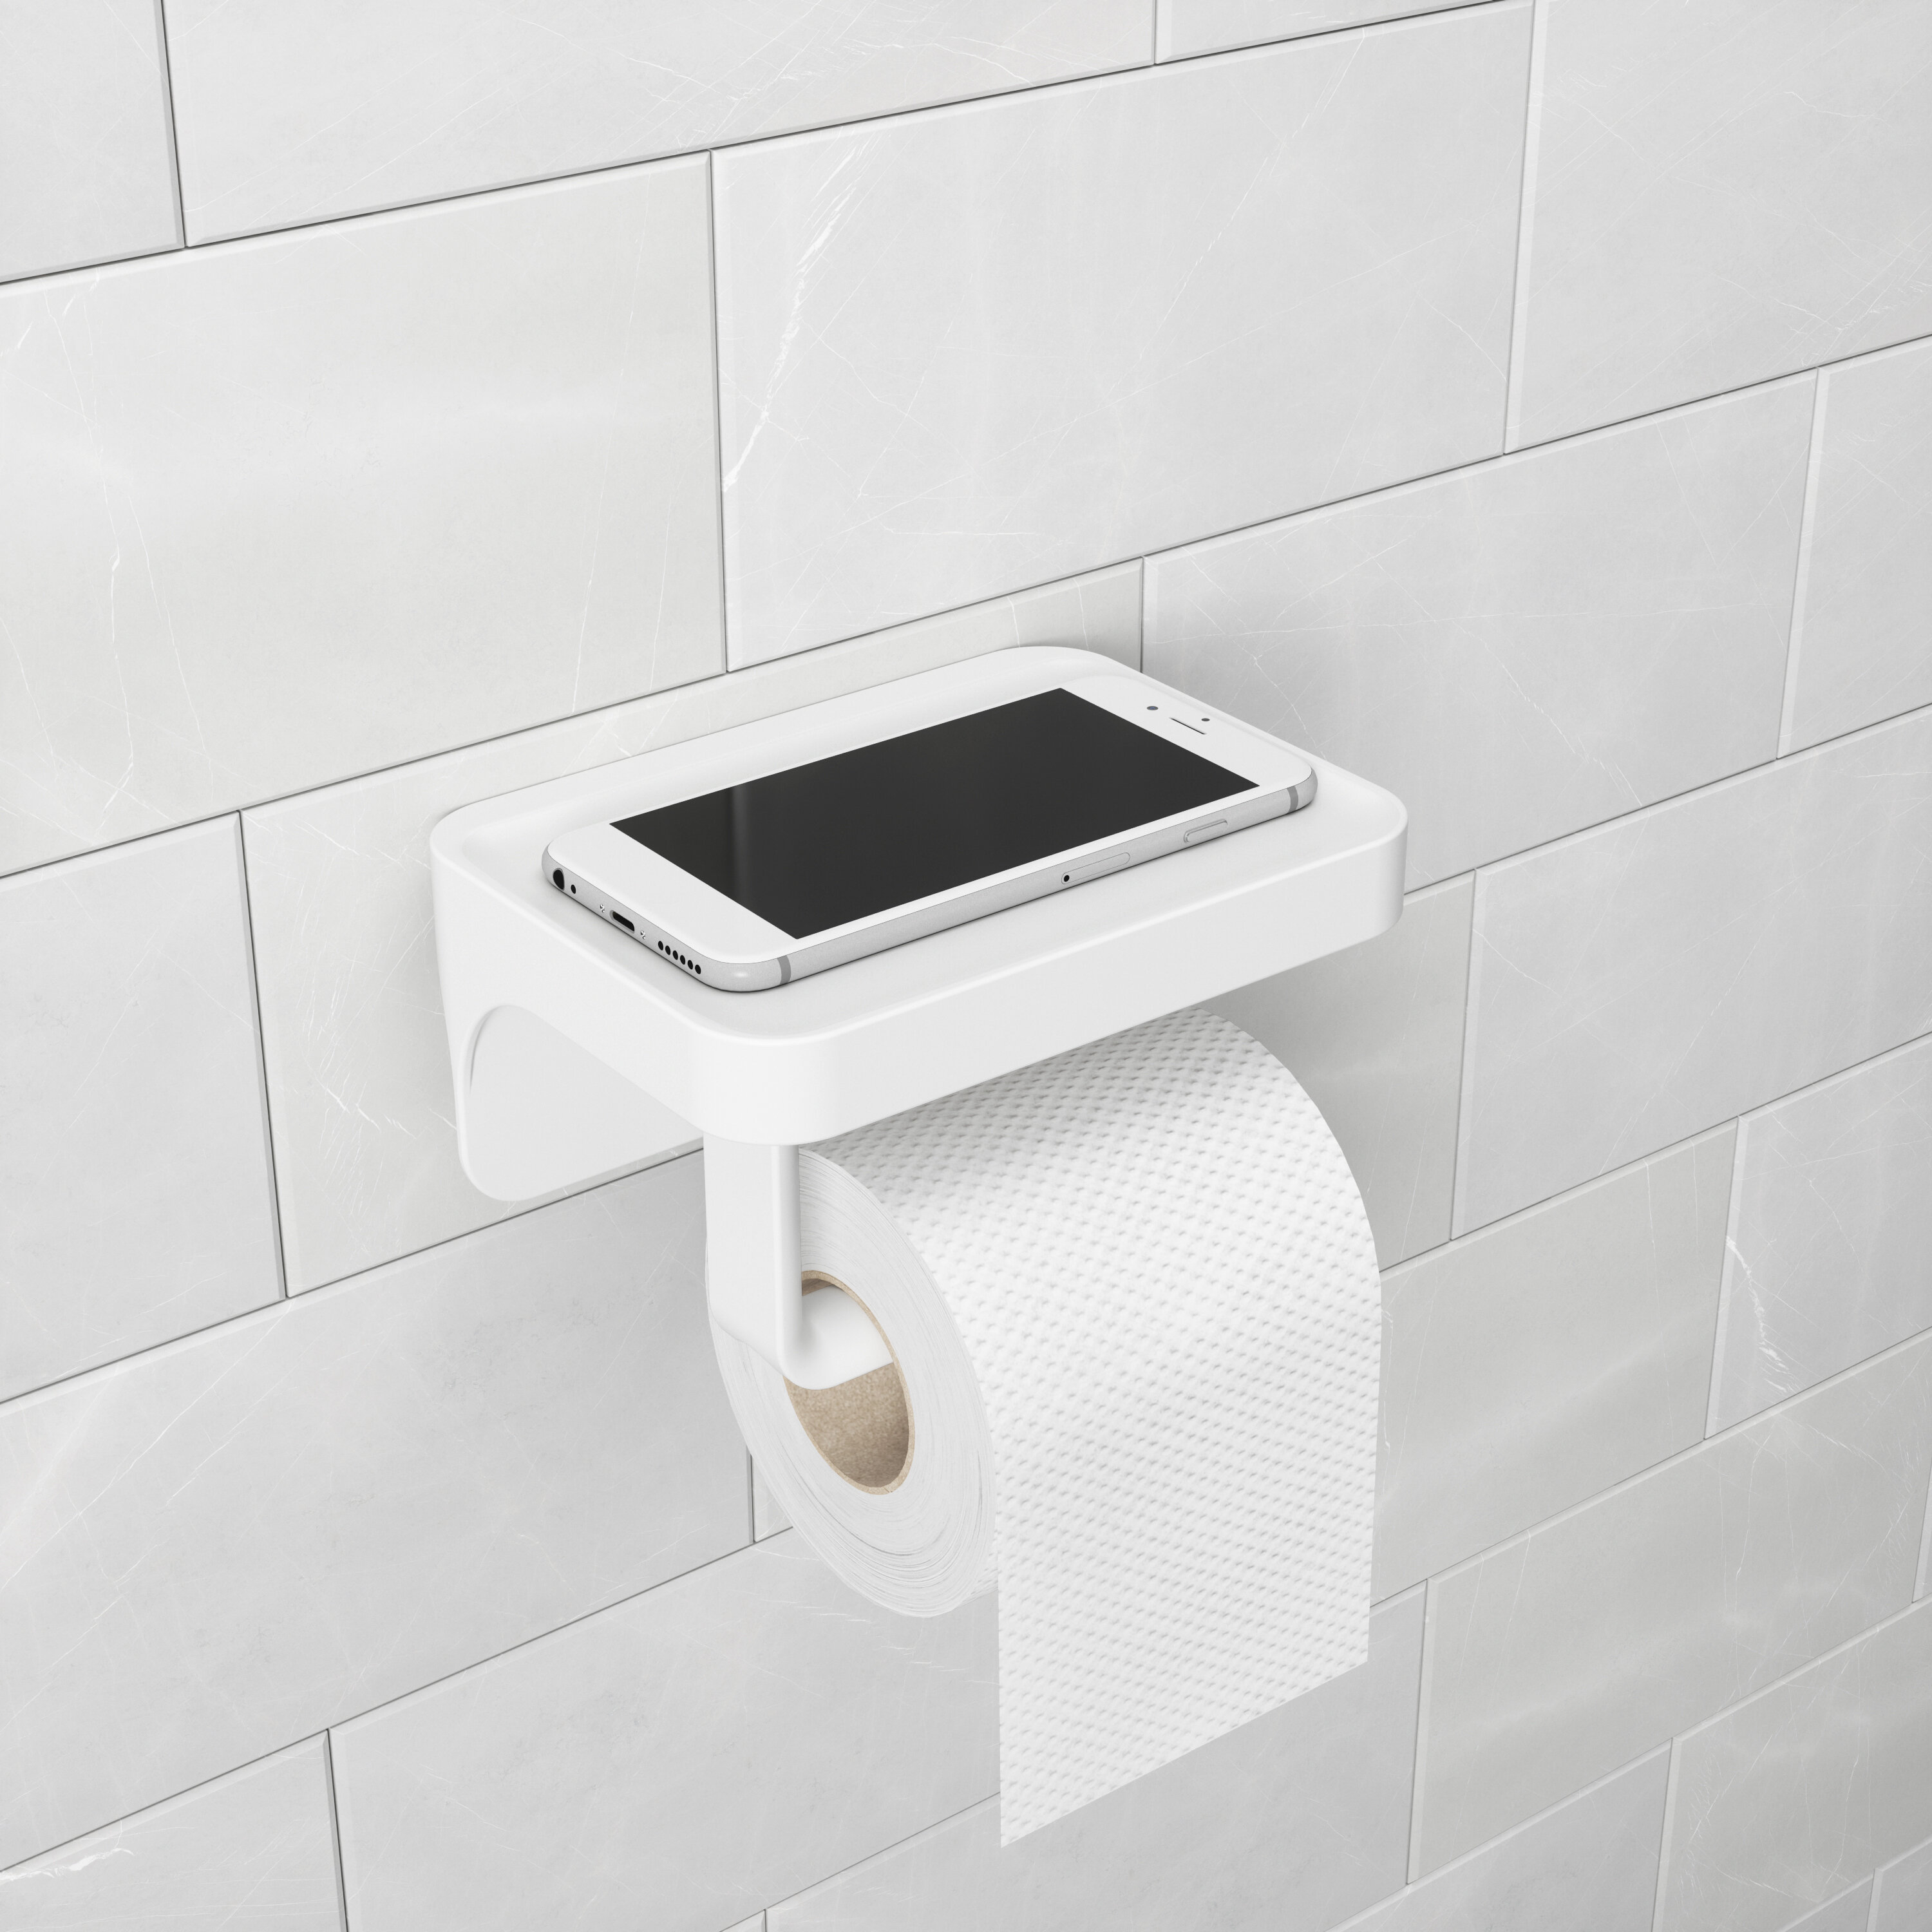 Umbra Flex Sure Lock Wall Mount Toilet Paper Holder Reviews Wayfair